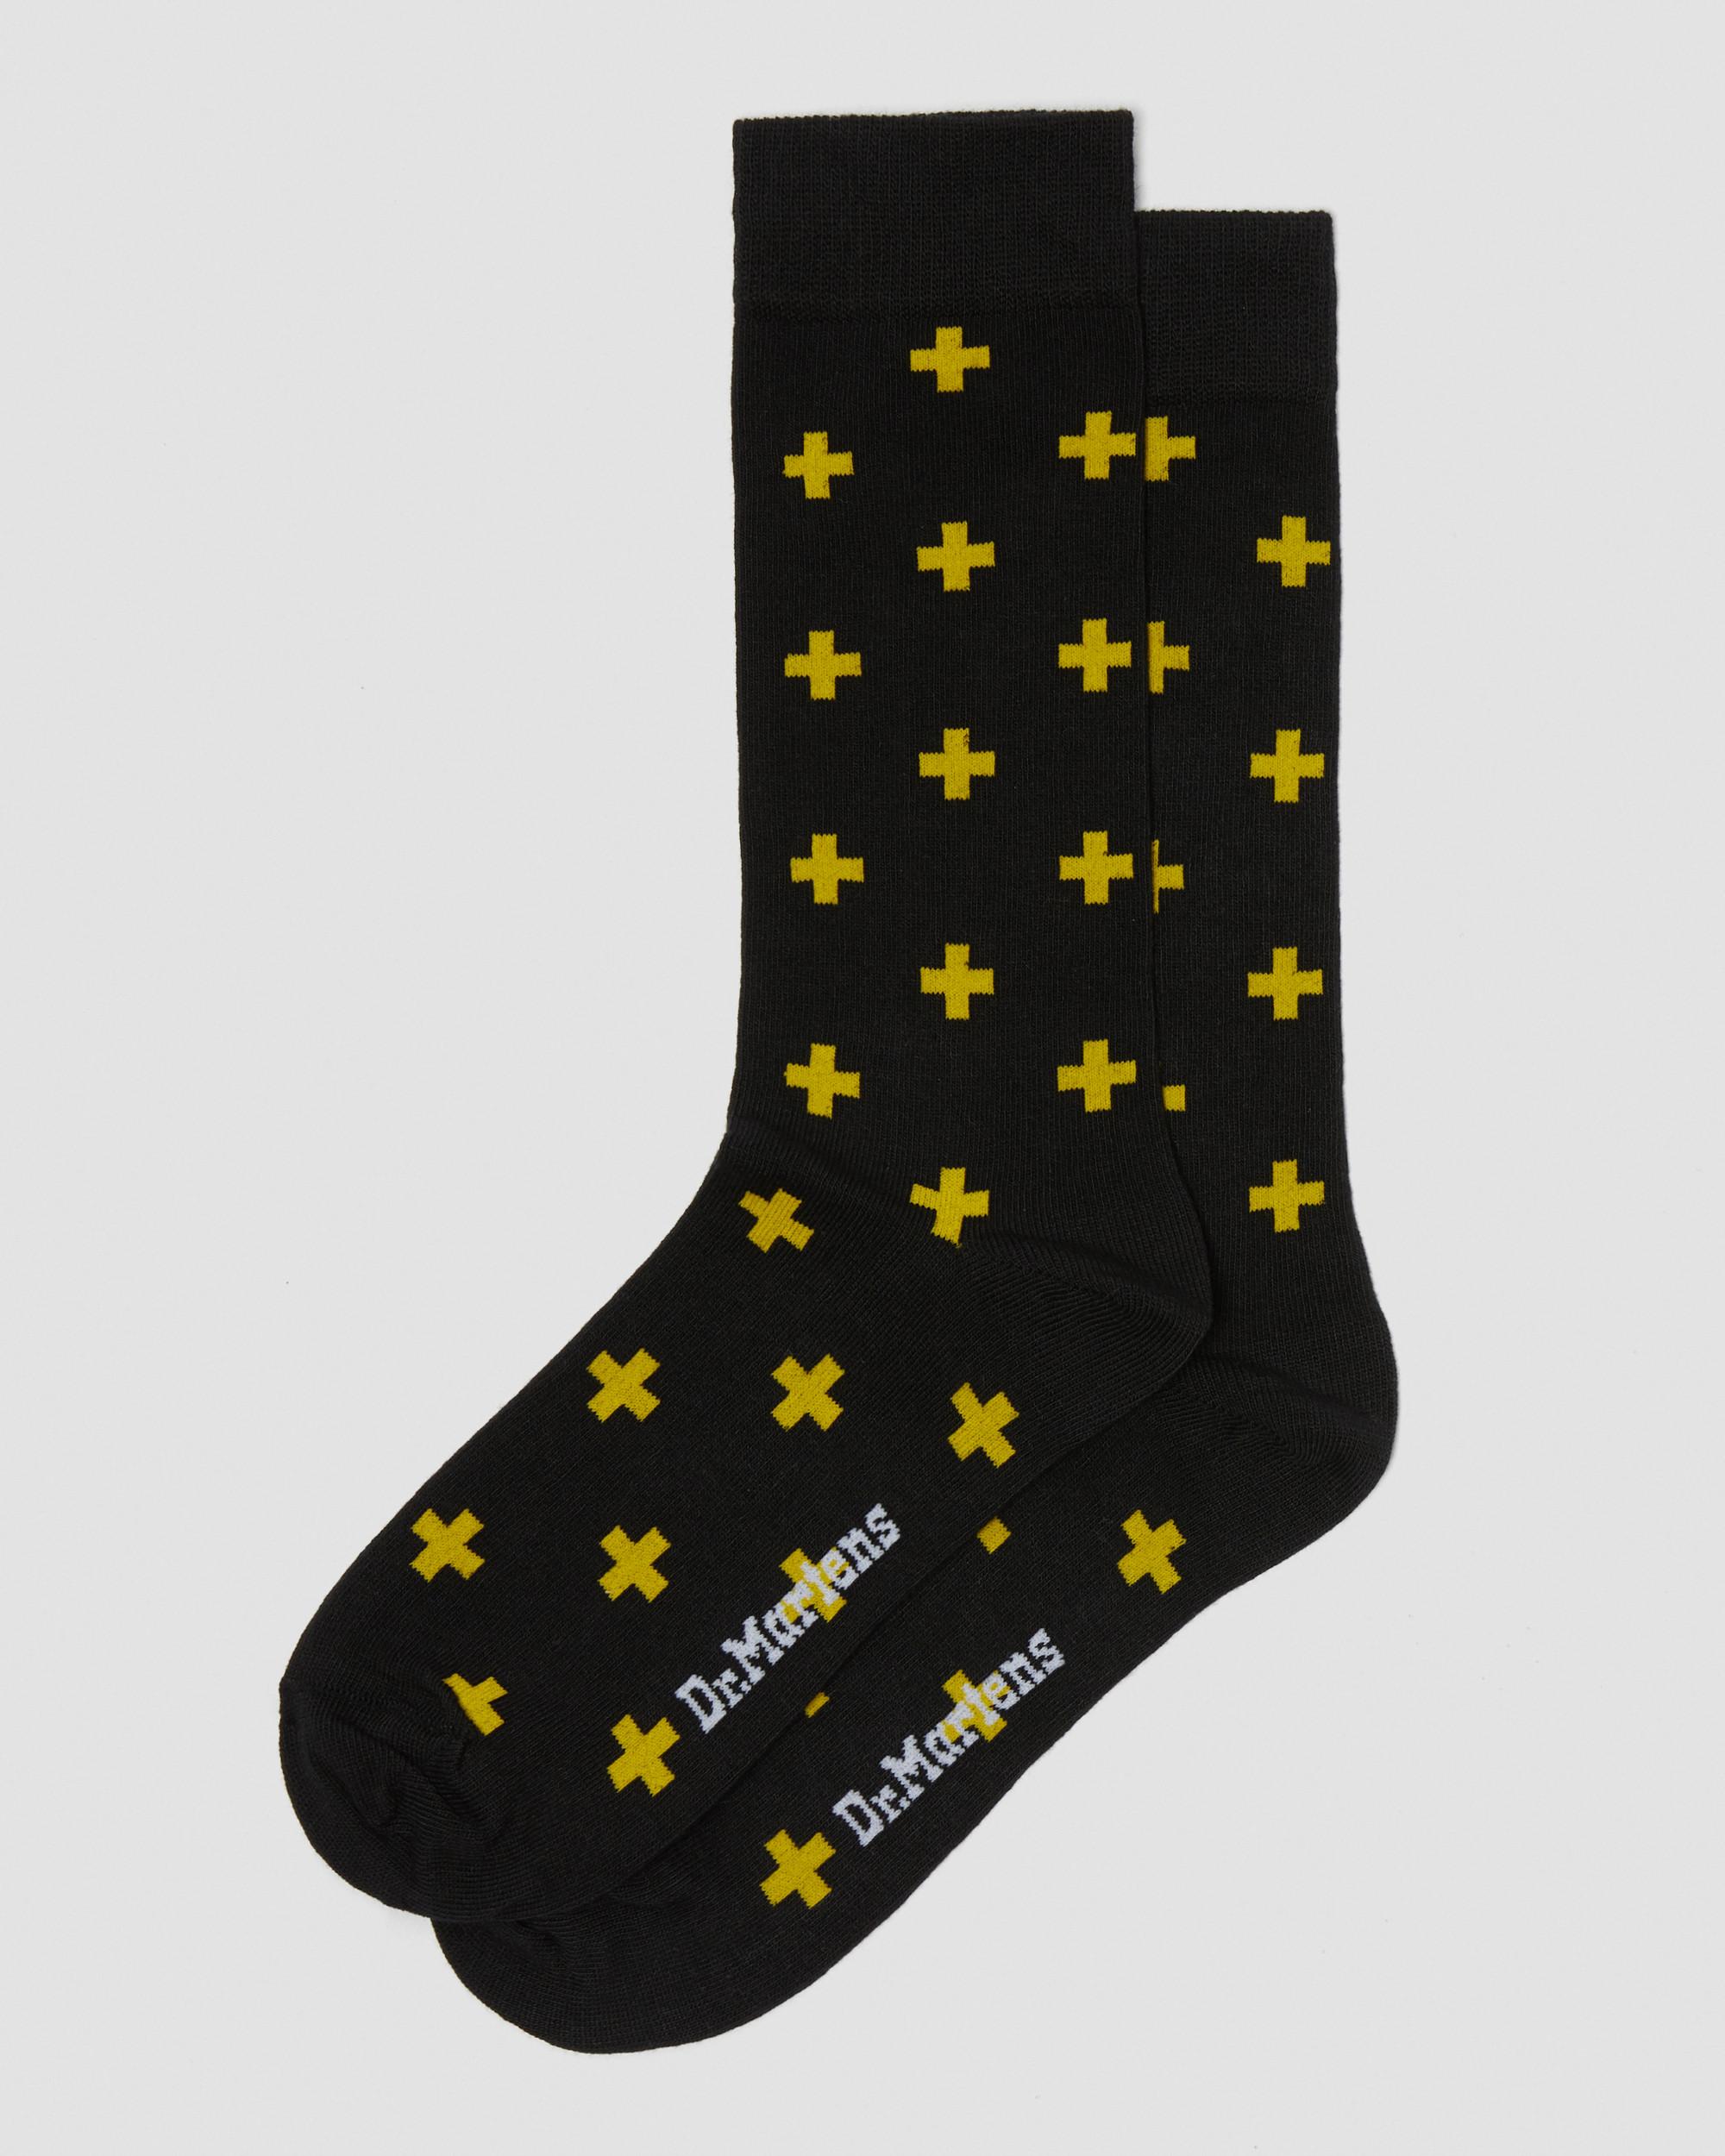 Docs Cross Logo Cotton Blend Socks in Black+Yellow